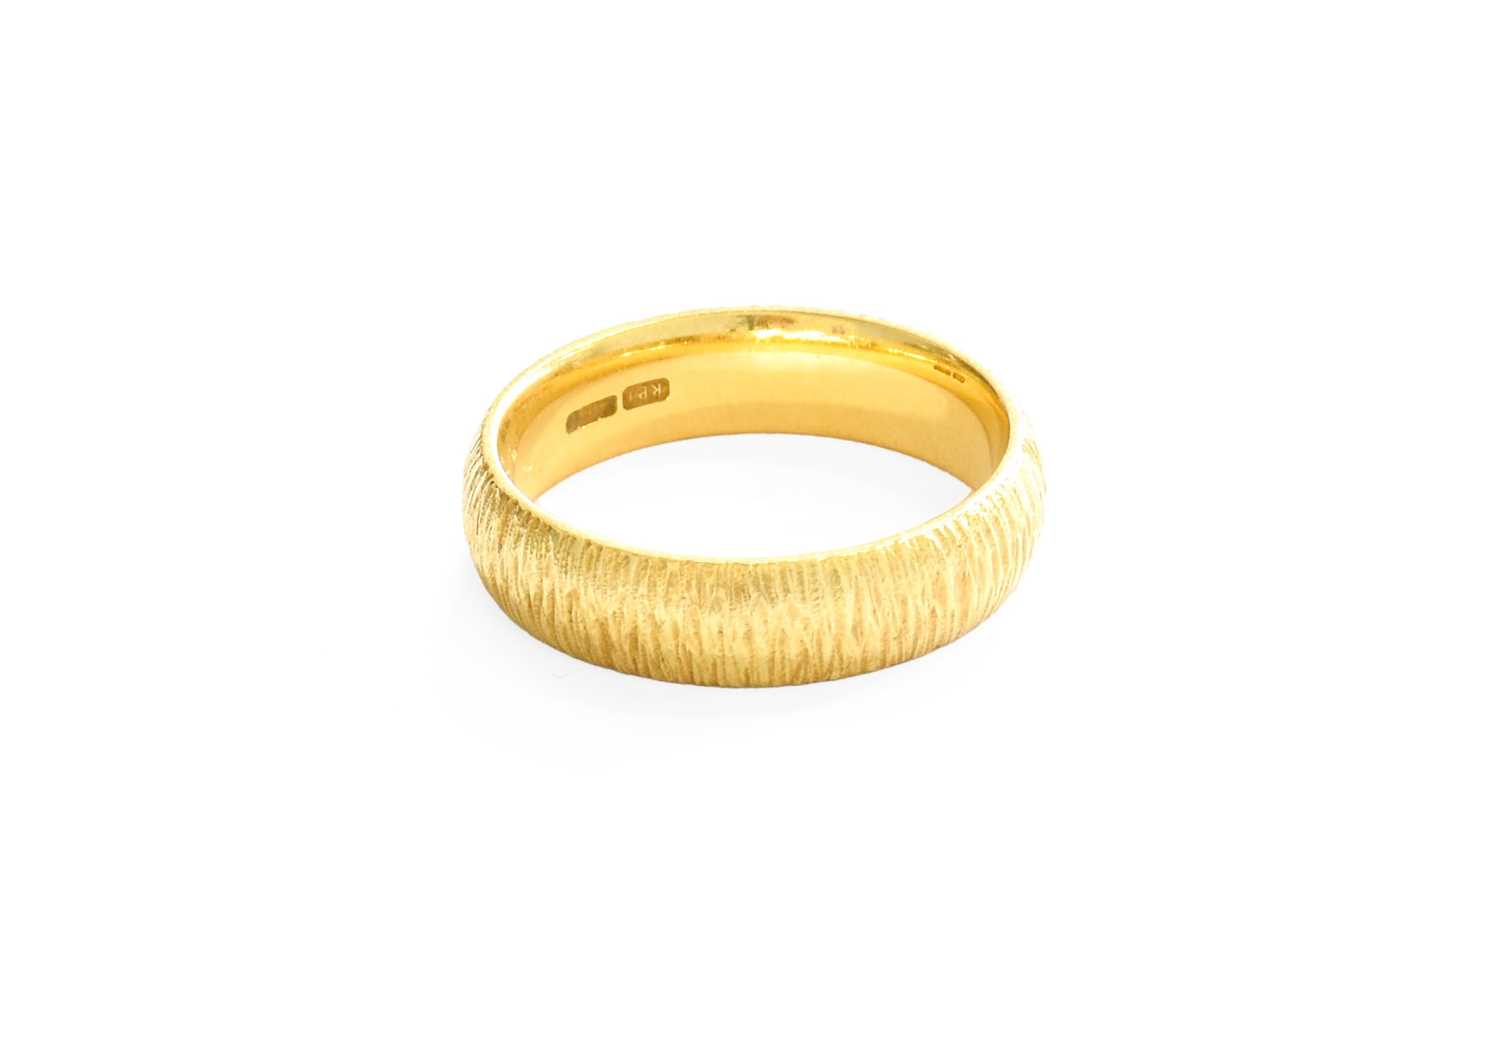 An 18 Carat Gold Textured Band Ring, finger size N1/2 Gross weight 6.4 grams.